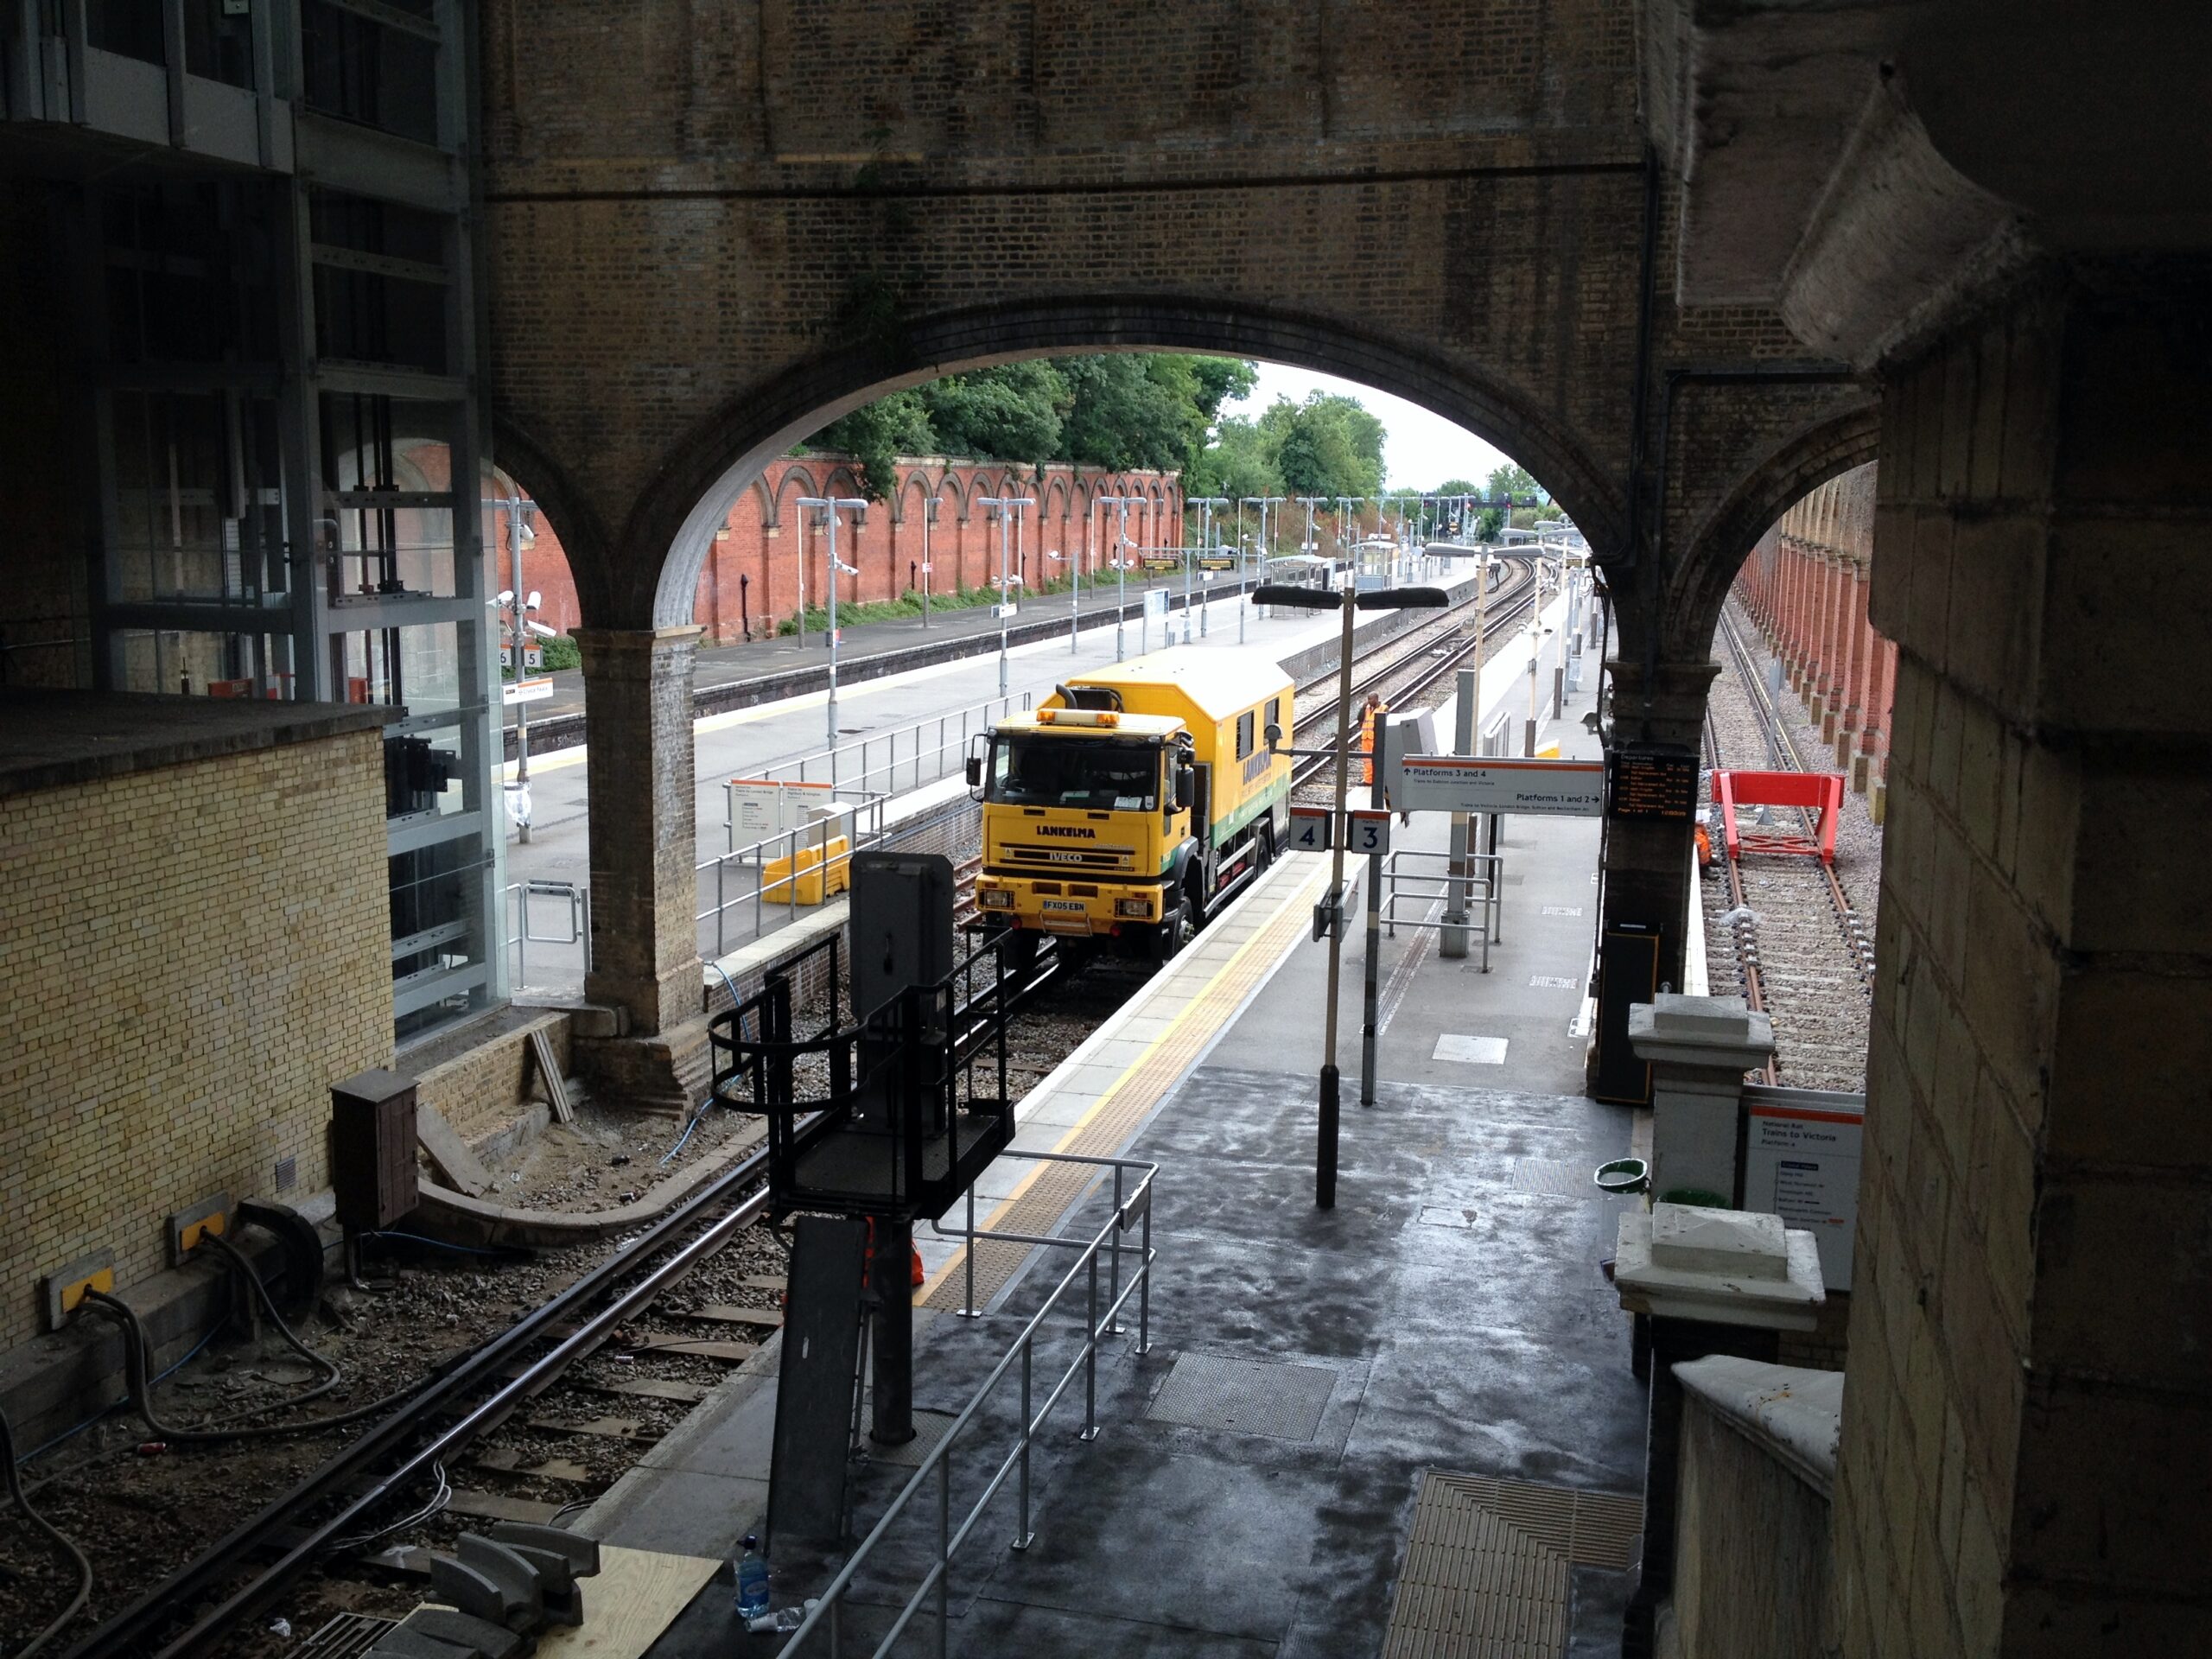 UK12 testing on track at Crystal Palace station